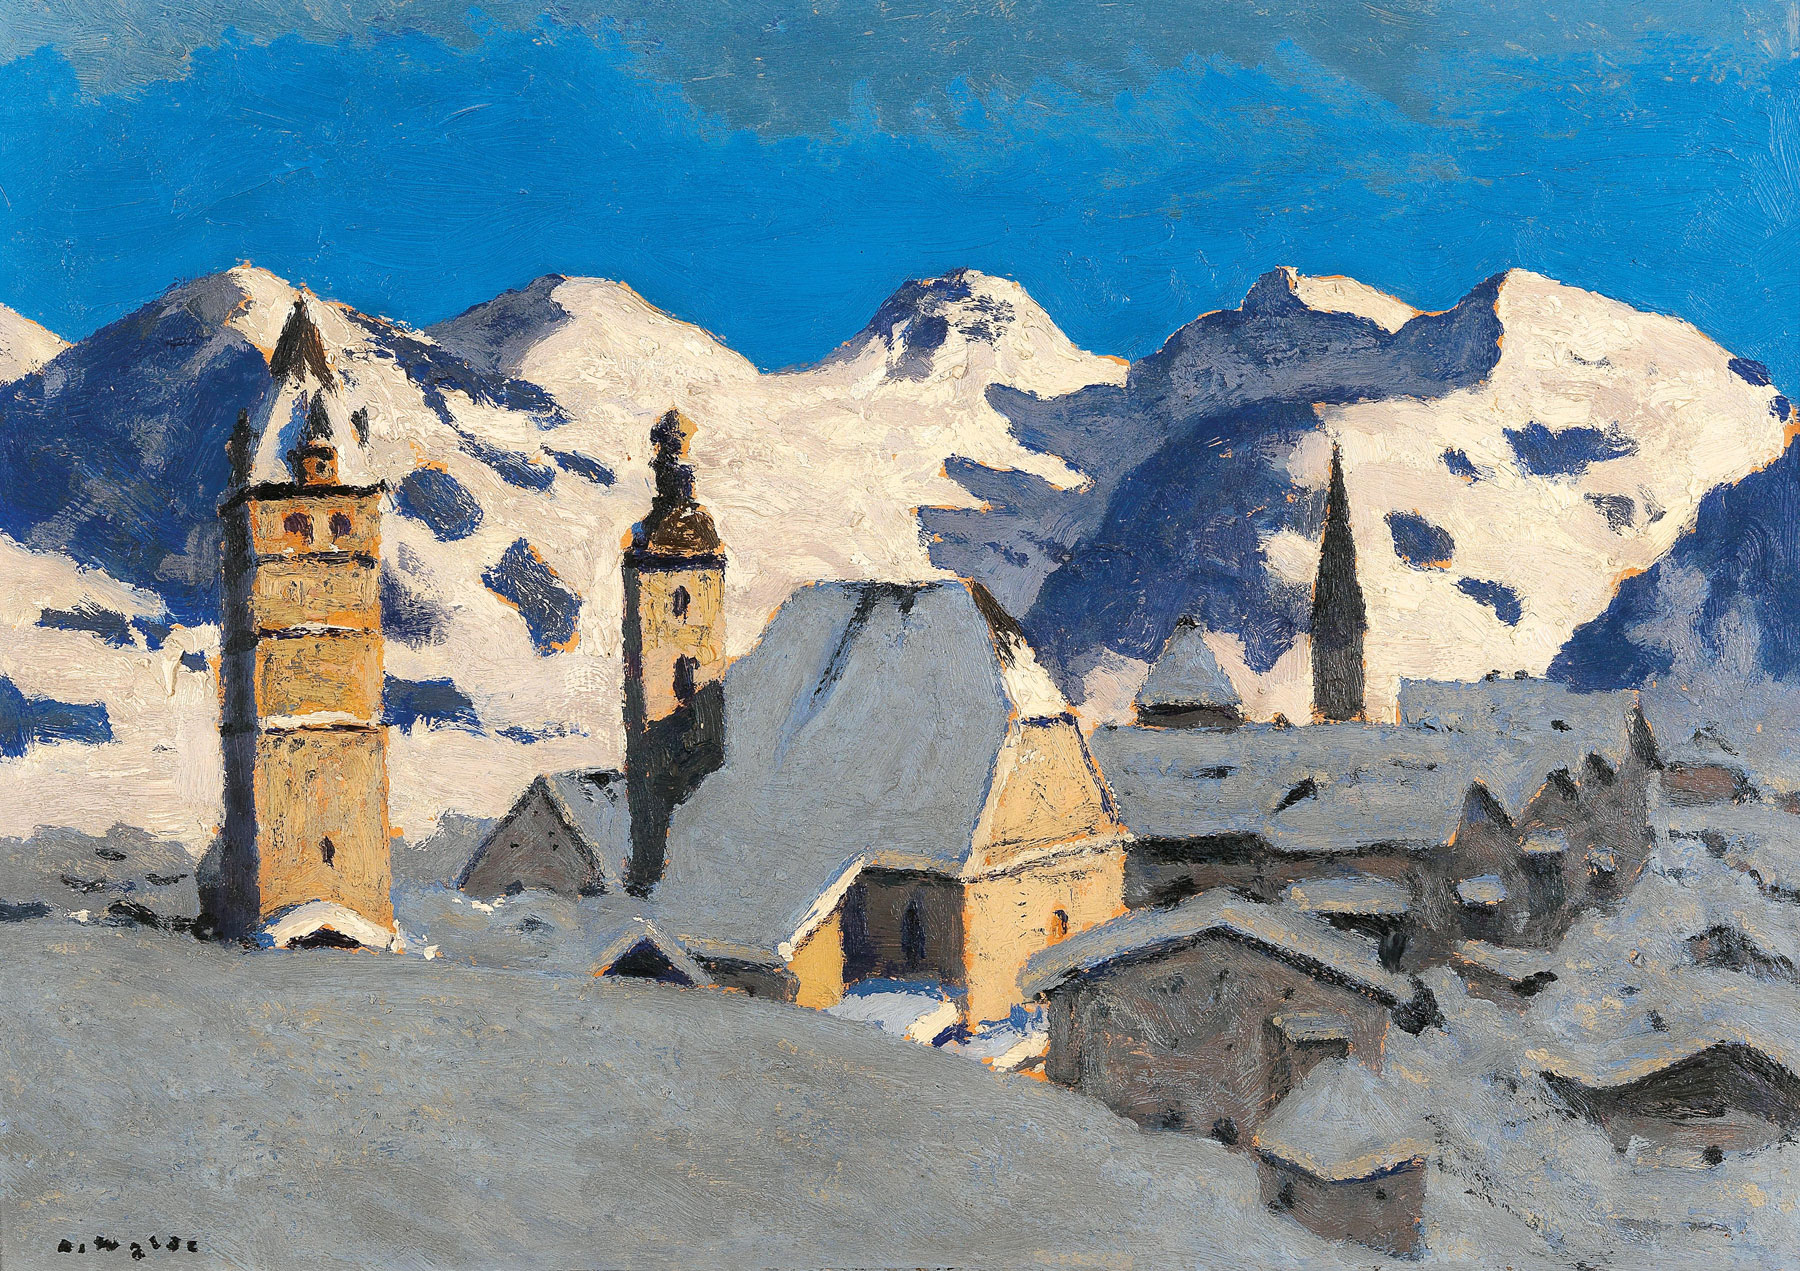 Alfons Walde, KitzbÃ¼hel (1930; olio su cartone, 43 x 58 cm; Collezione privata)
